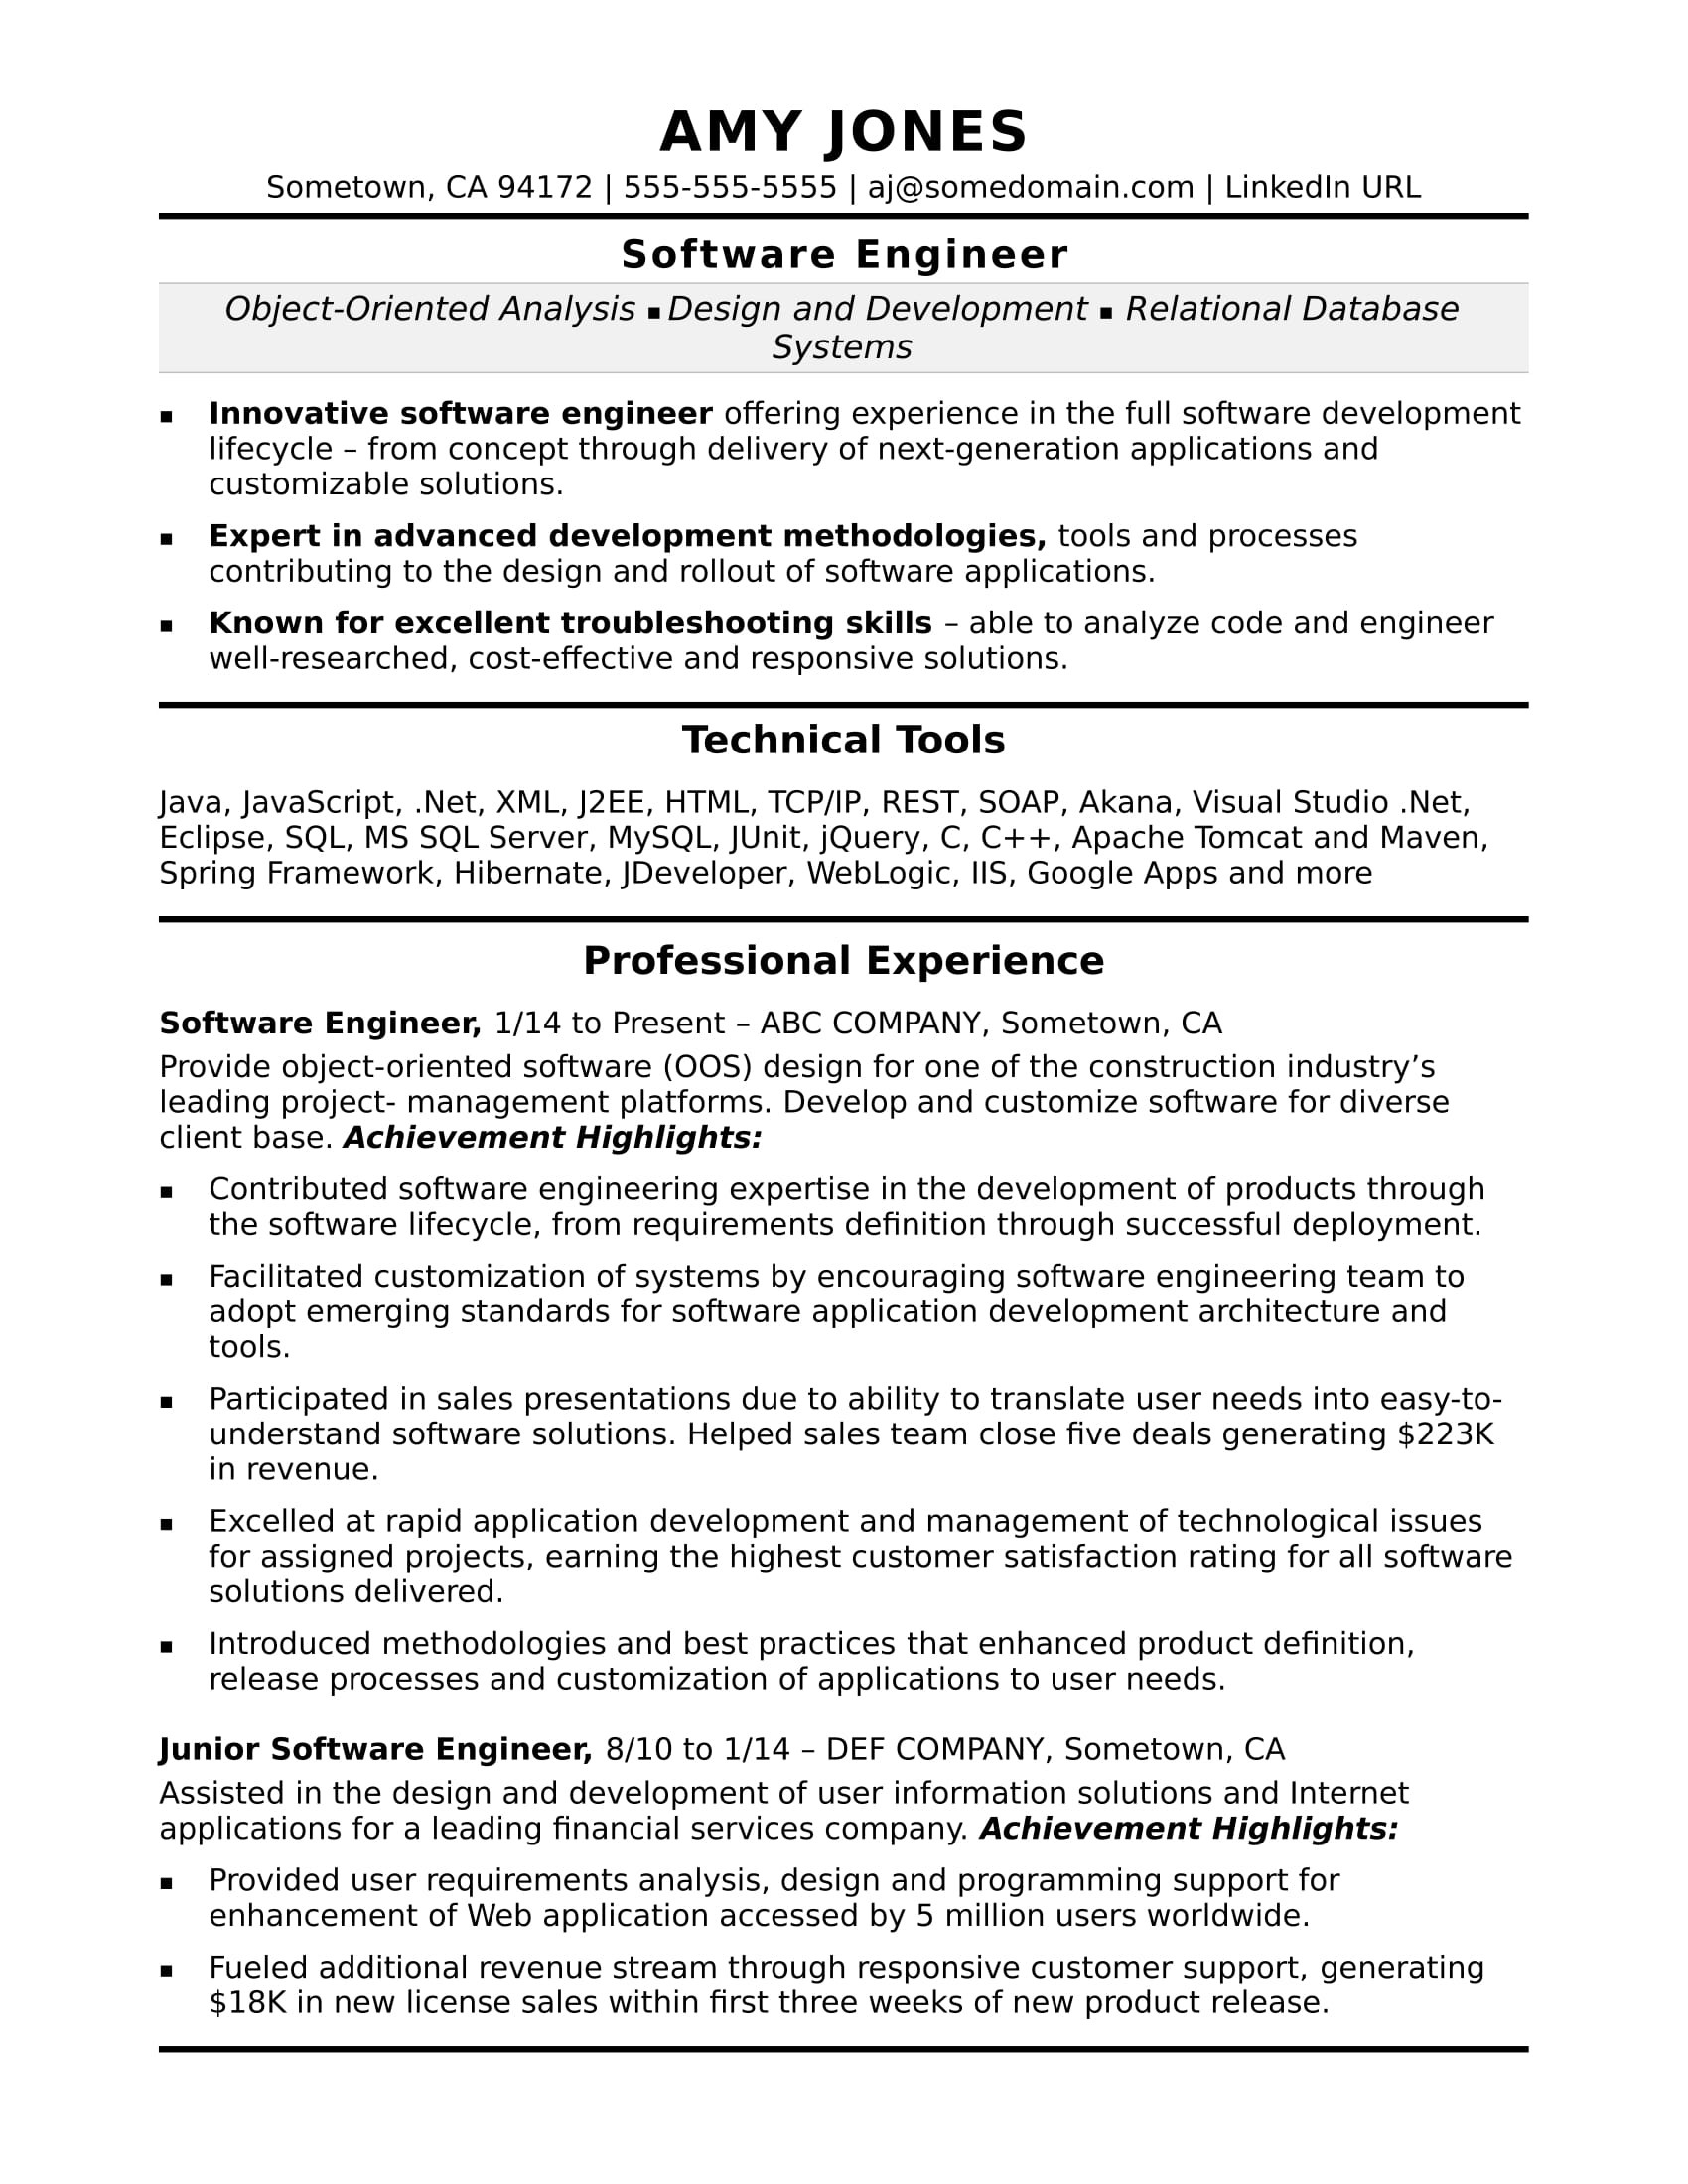 Sample Resume for Us It Jobs software Engineer Resume Monster.com